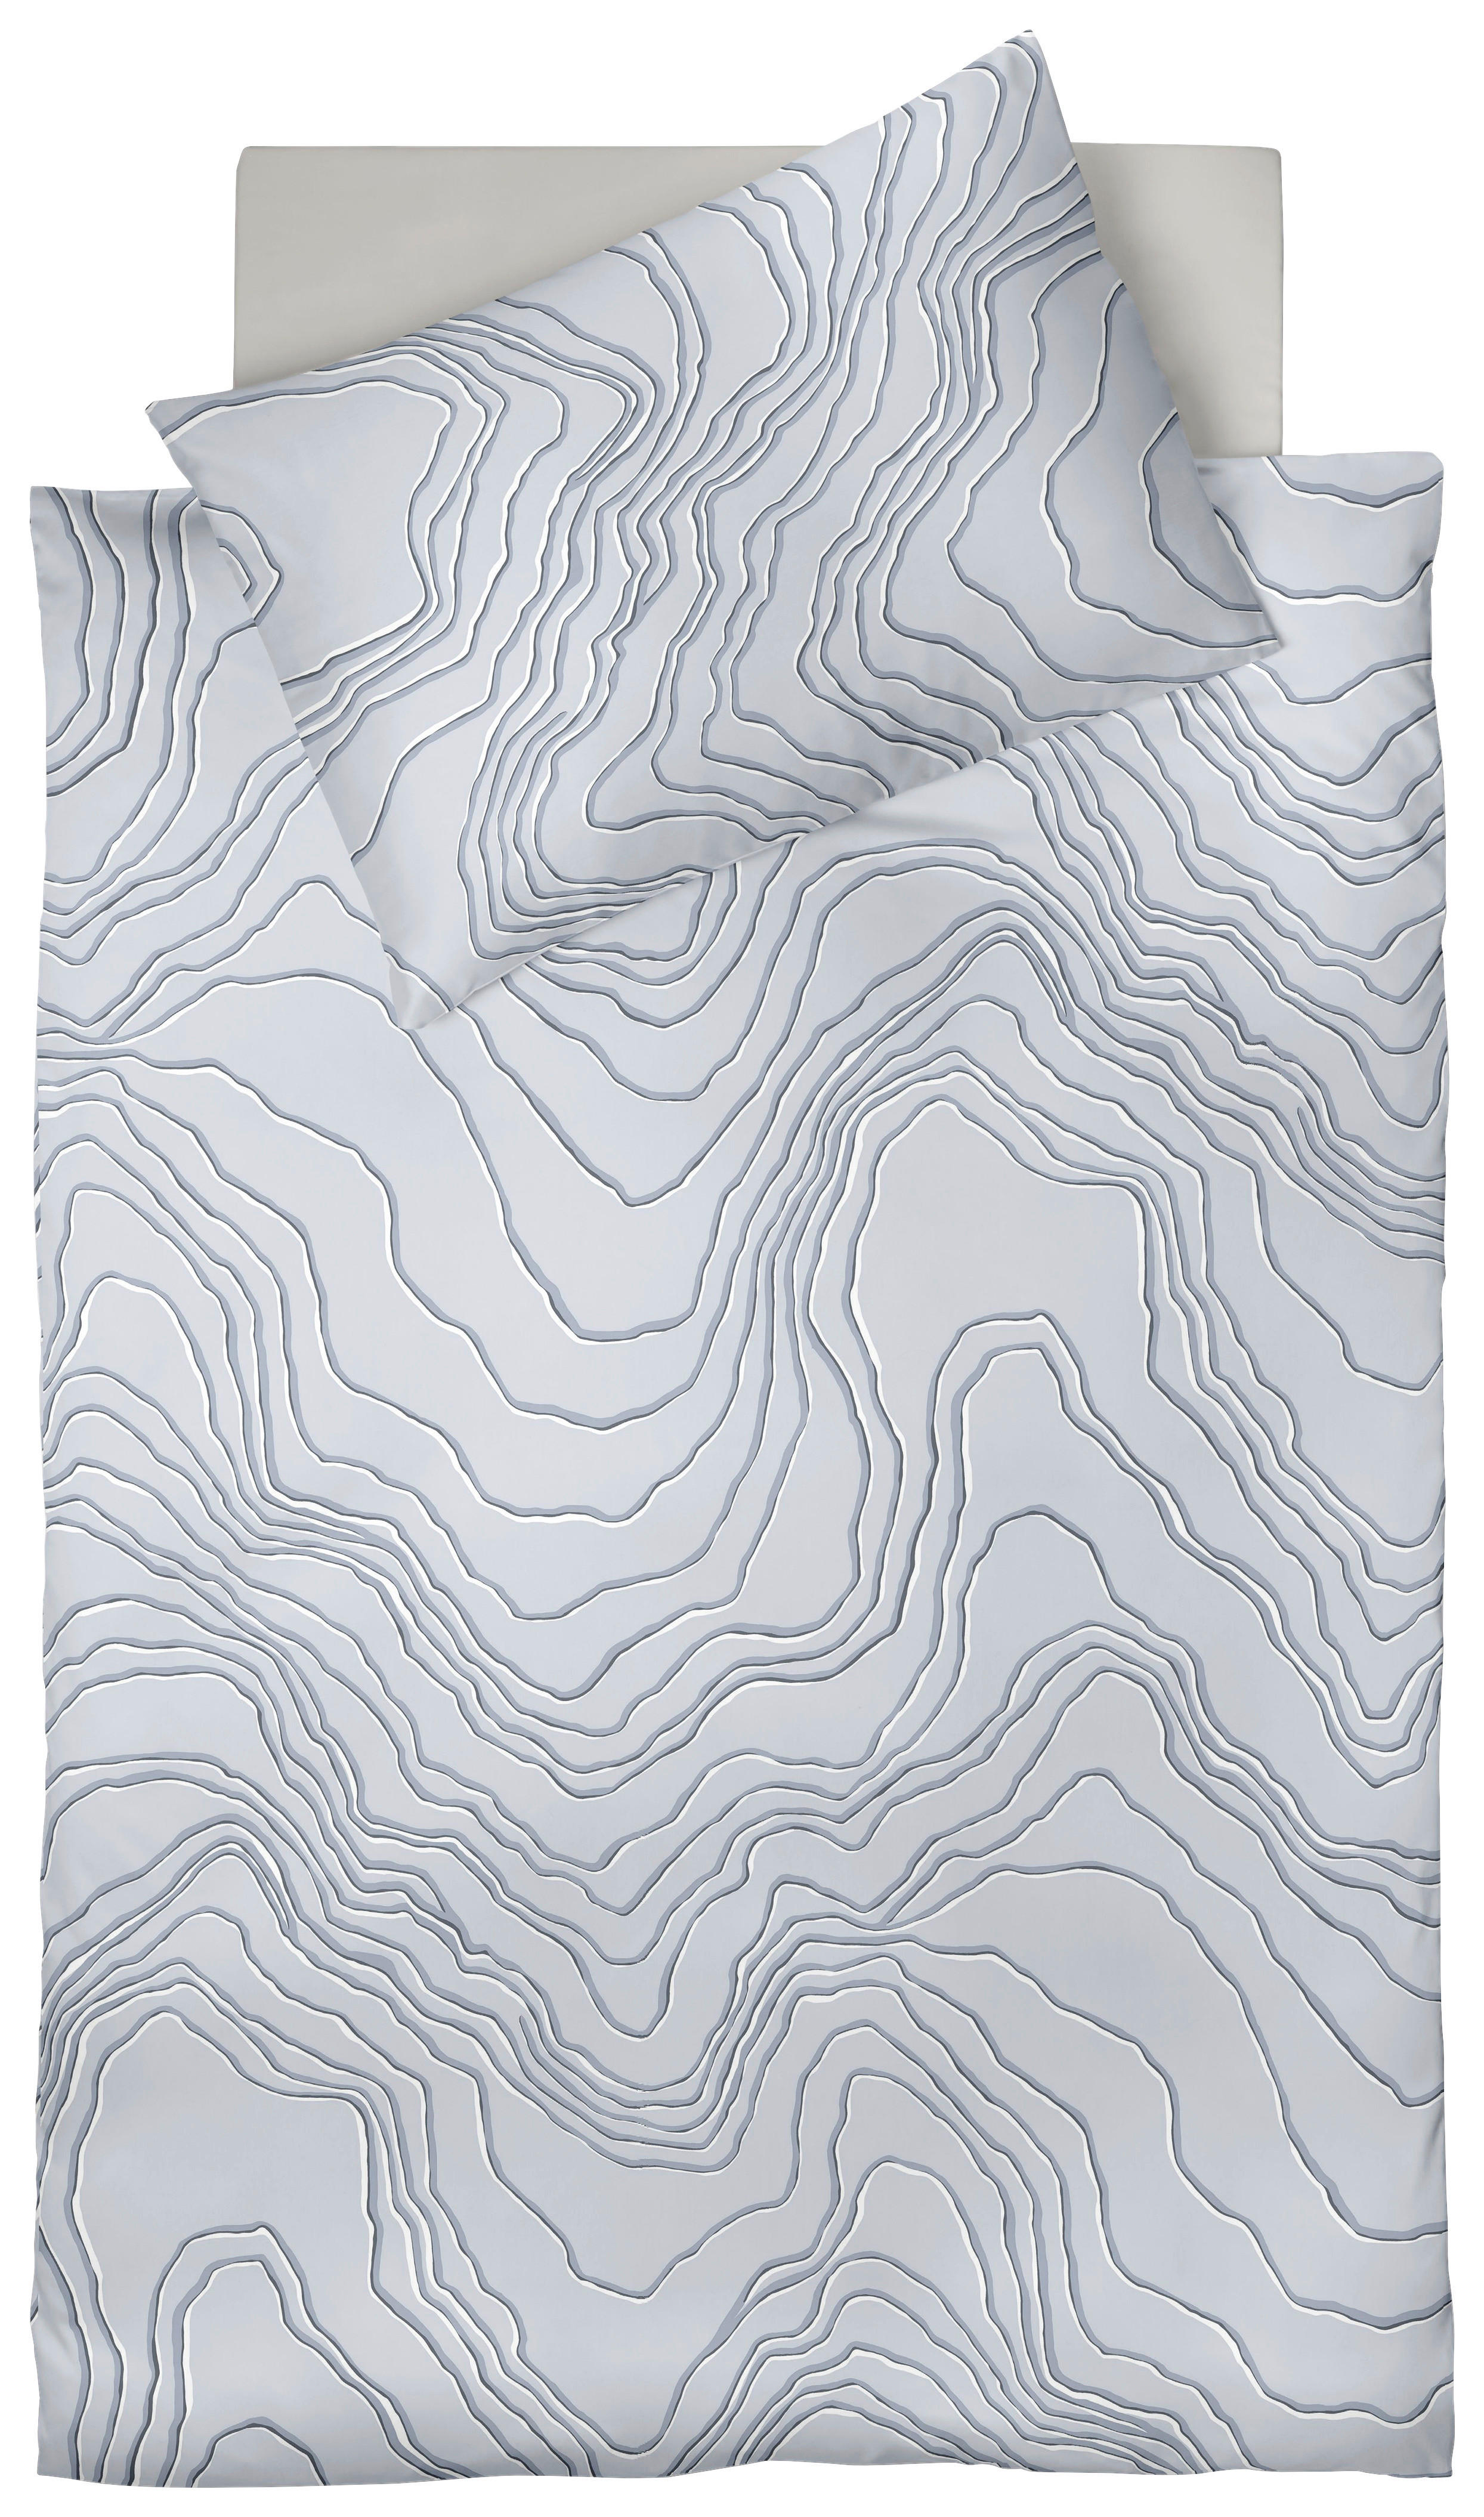 Fleuresse POVLEČENÍ, makosatén, barvy stříbra, 140/220 cm - barvy stříbra